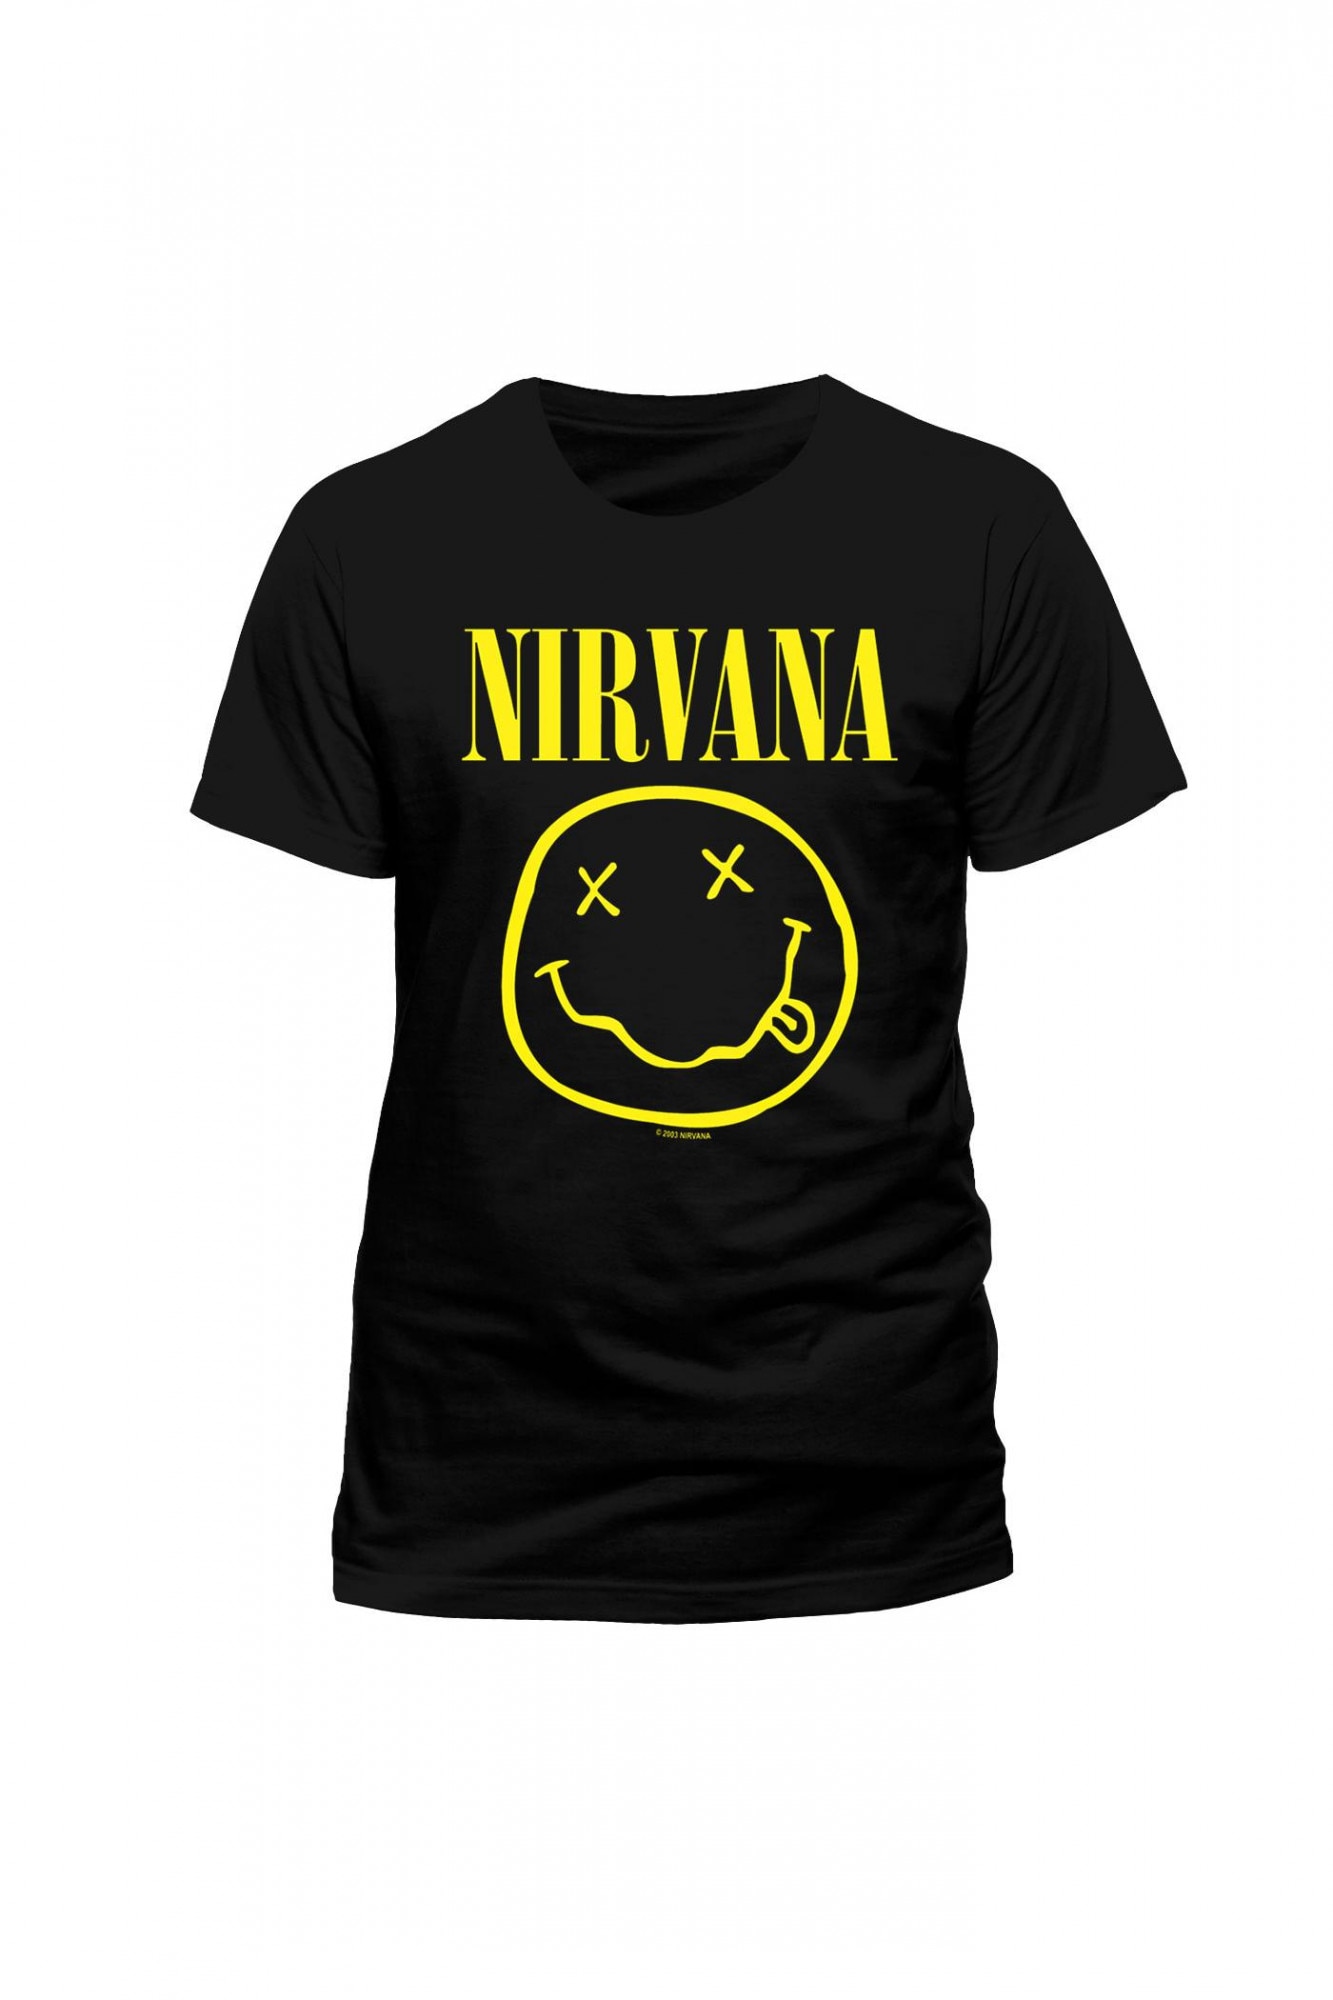 Nirvana t. Майка Nirvana. Футболка Нирвана MTV. Футболка Nirvana Inje. Футболка Нирвана мужская.